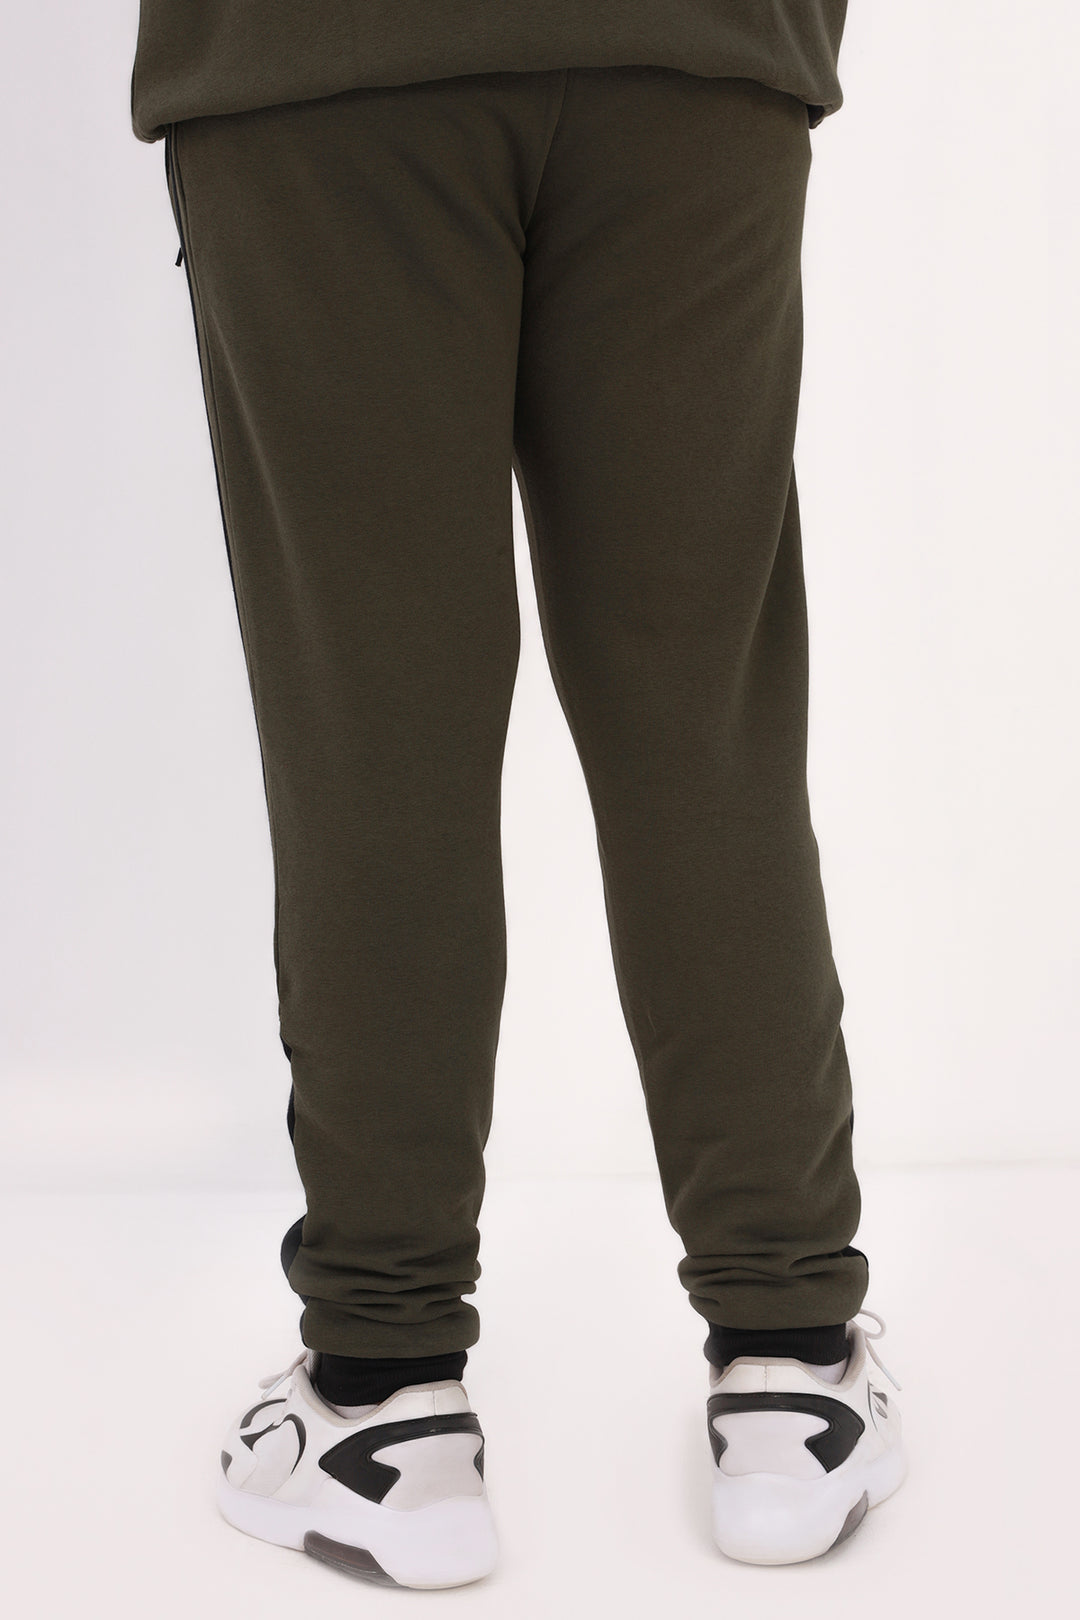 Moss Green & Black Paneled Jogger Pants Plus Size